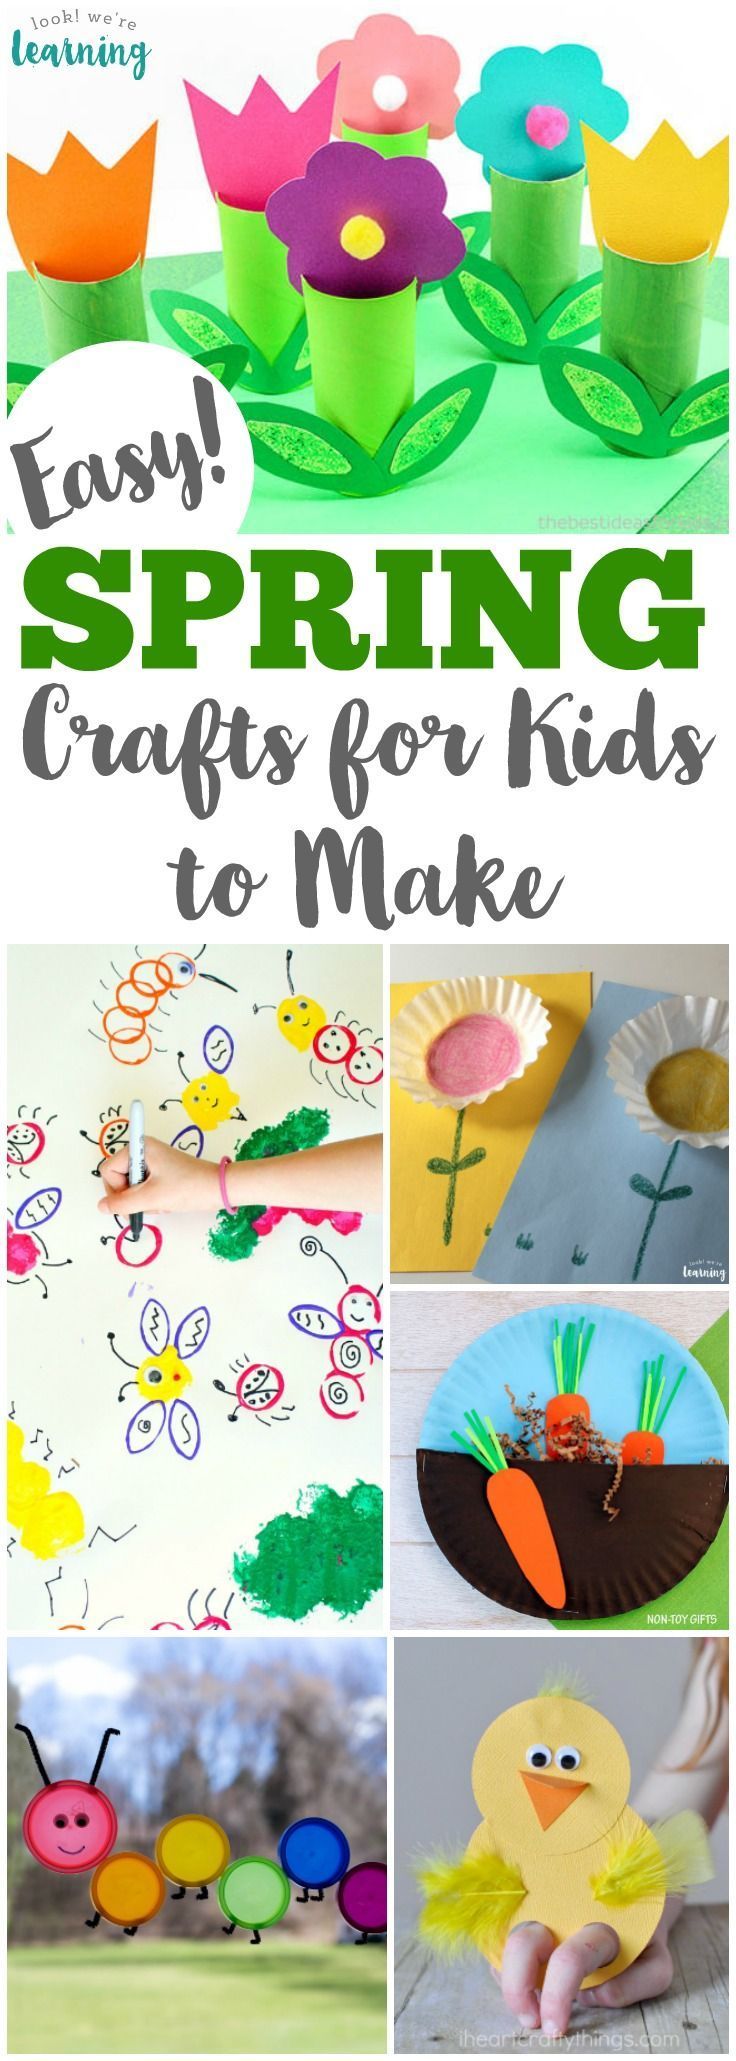 22 spring crafts to make
 ideas